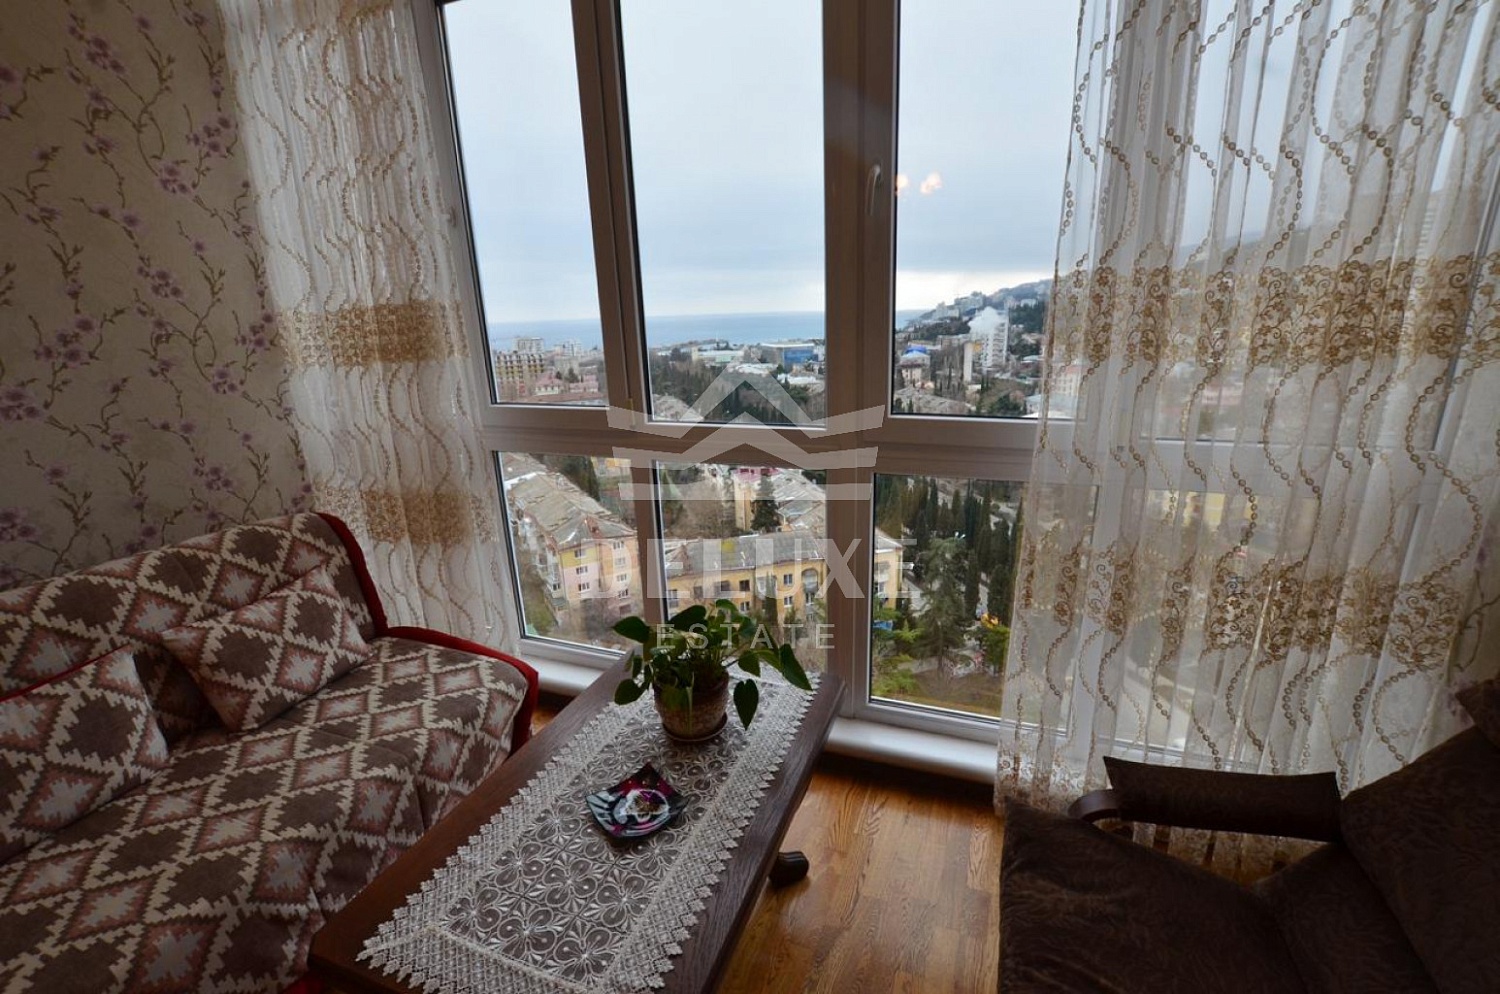 3-комнатная квартира с видом на море в центре Ялты в ЖК «Московский»